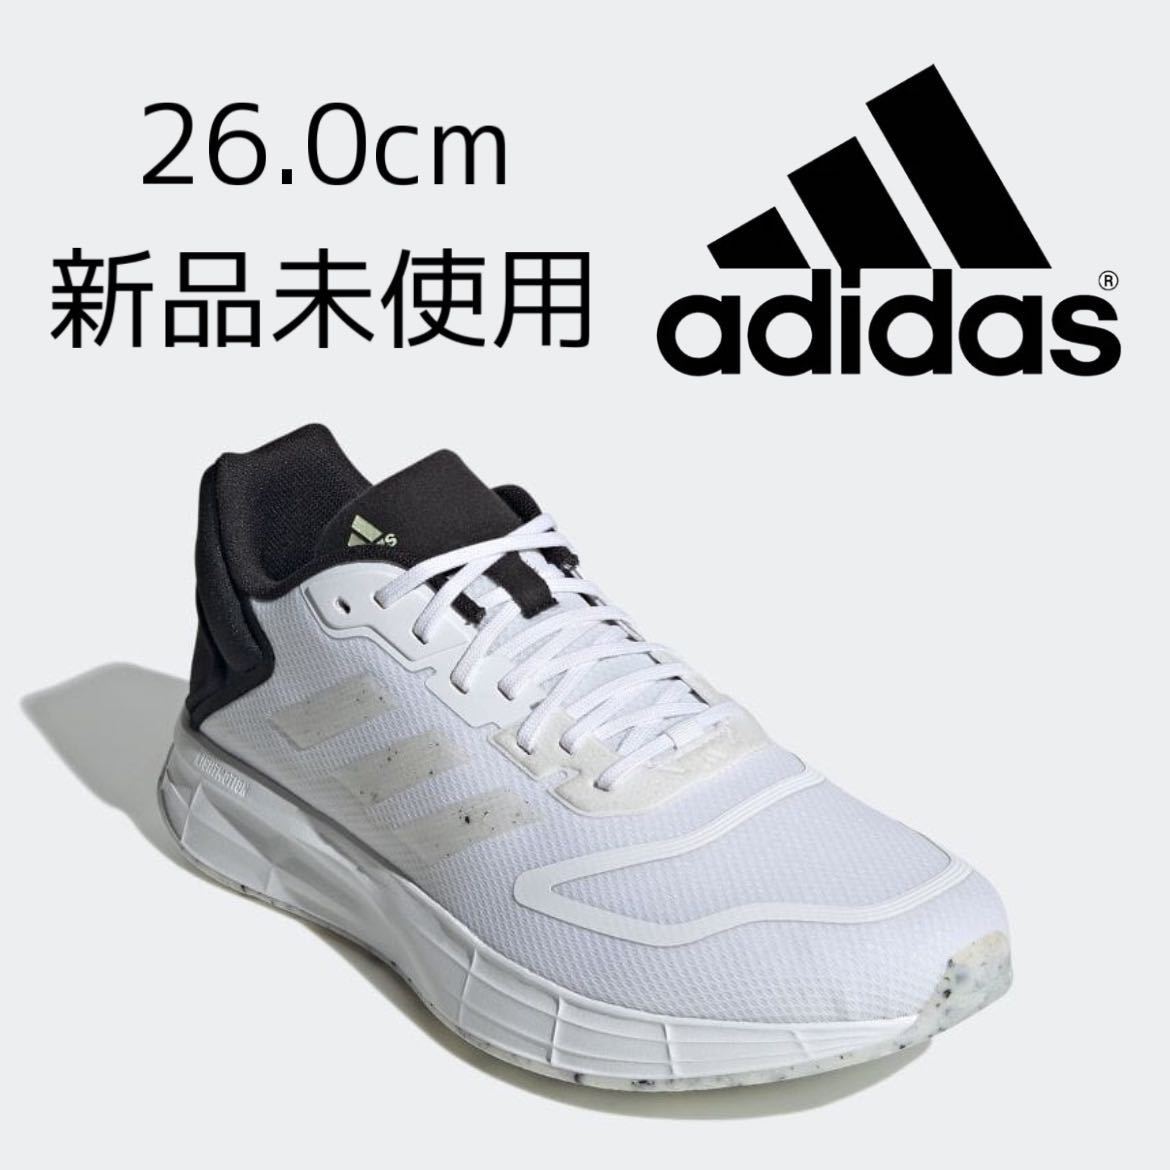 26.0cm 新品 adidas DURAMO SL 2.0 アディダス デュラモ ランニングシューズ 白 ホワイト 黒 ジョギングシューズ ジョグ ジム スニーカー